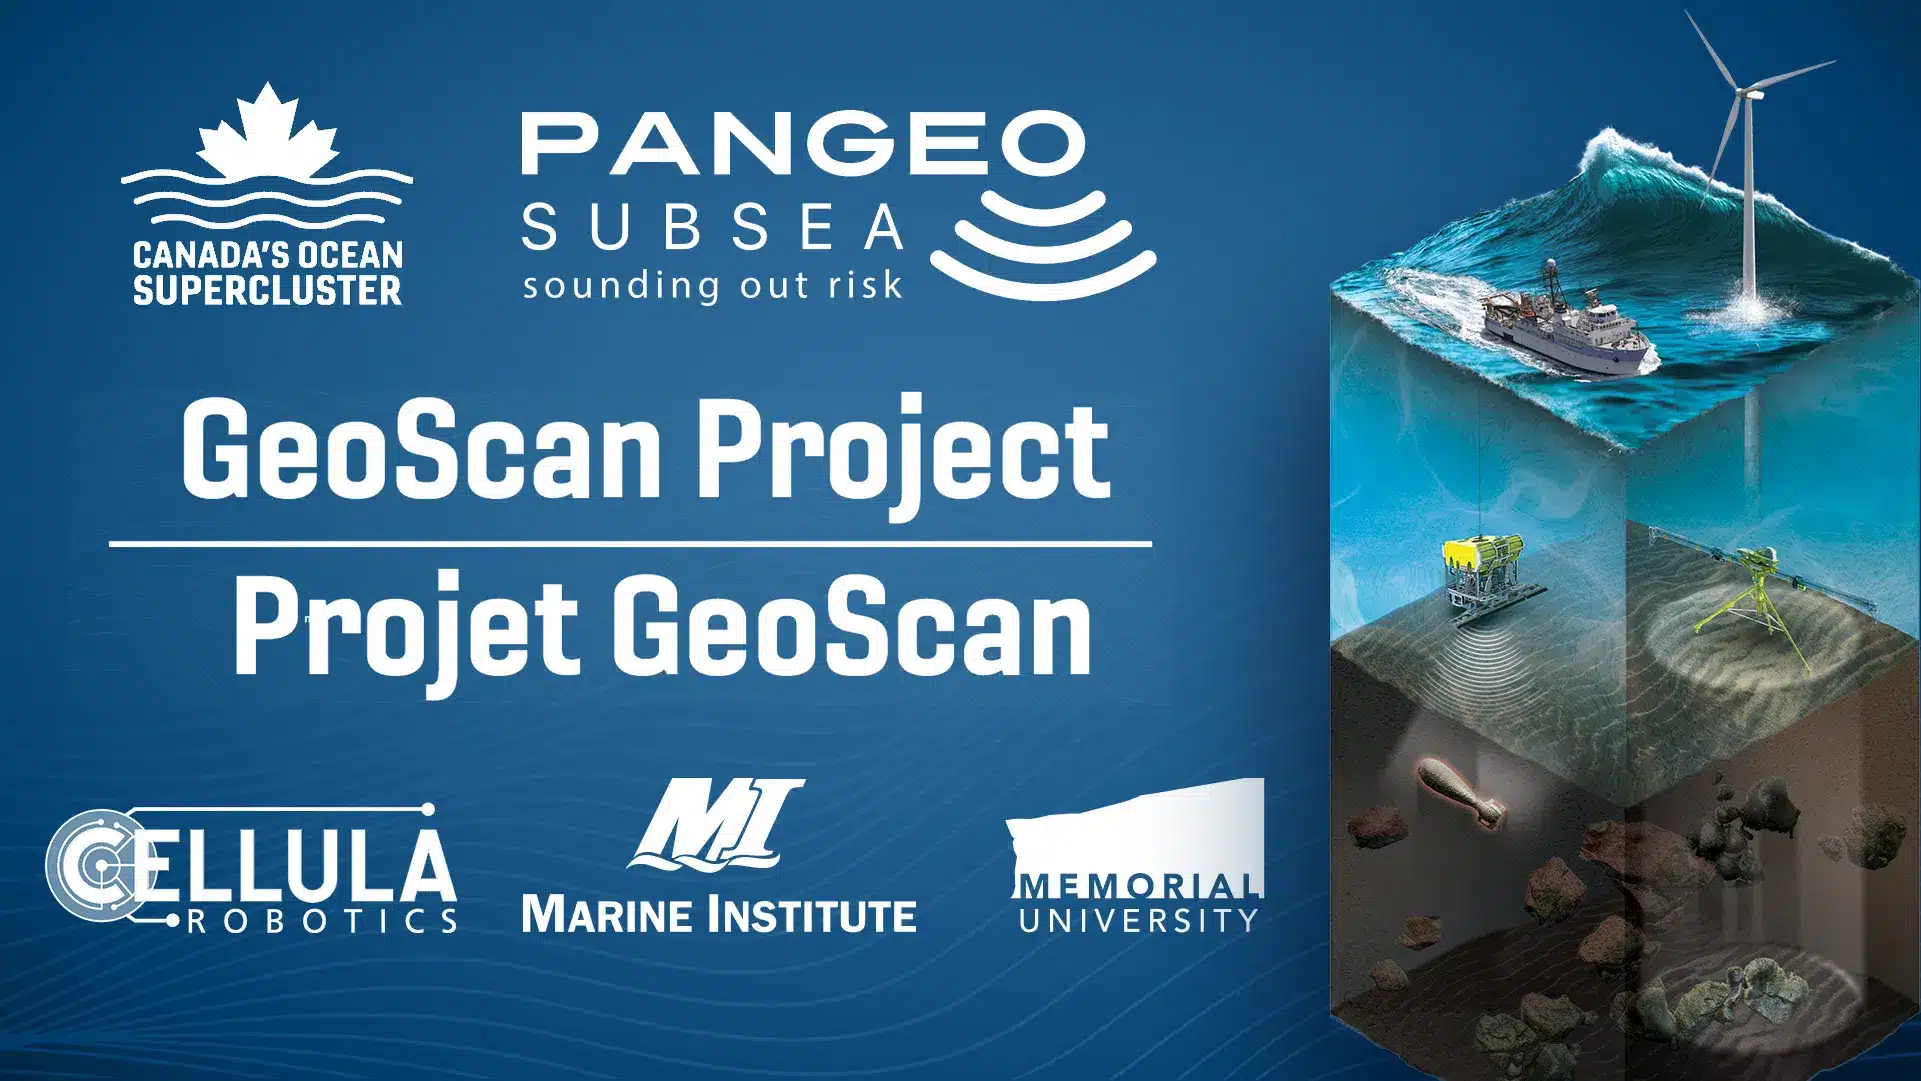 Canada’s Ocean Supercluster announces $3.4M GeoScan Project